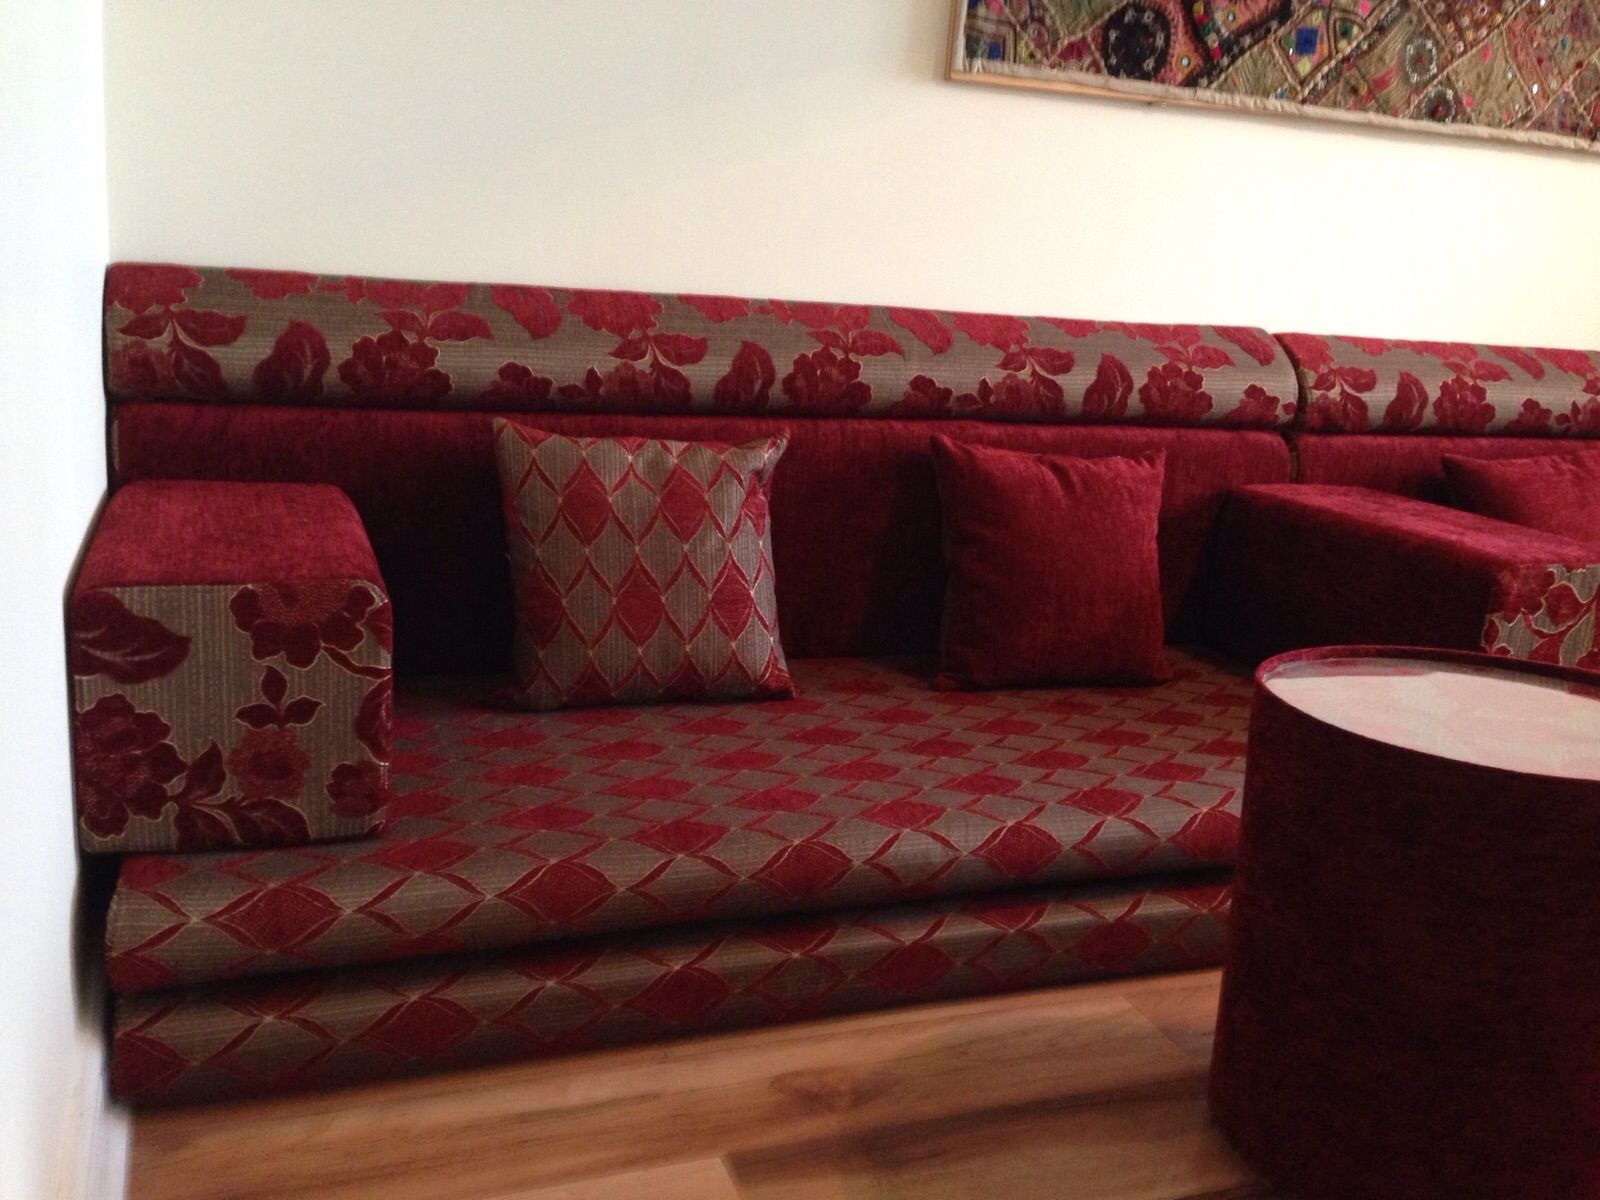 Arabic Majlis Sofas Uk 2014 Majlis Arabic Furniture Majlis With Regard To Moroccan Floor Seating Furniture (View 6 of 15)